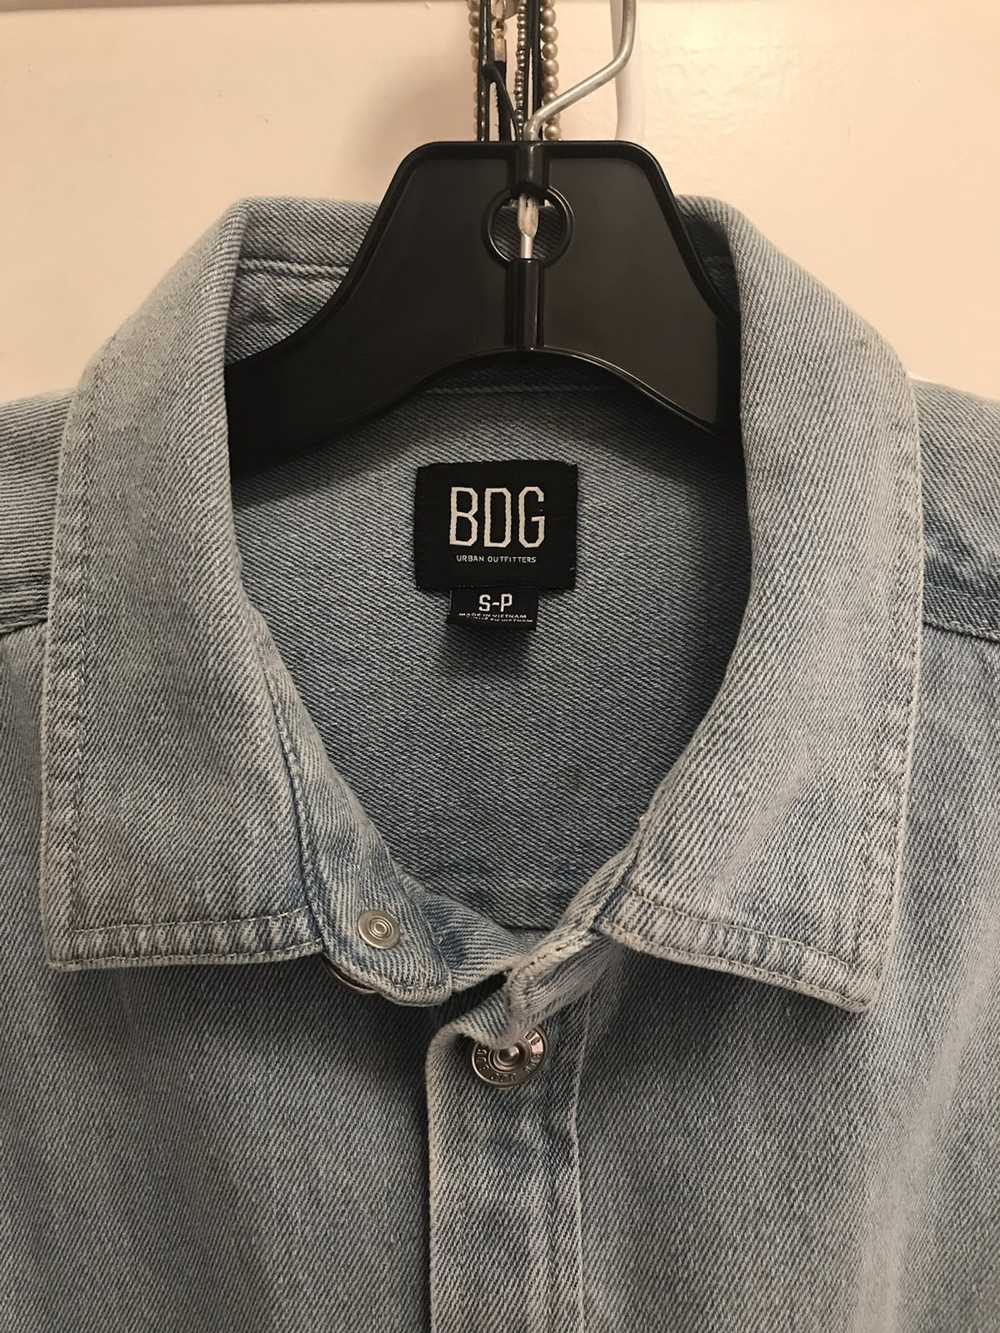 Bdg × Urban Outfitters BDG Denim Shirt - image 2